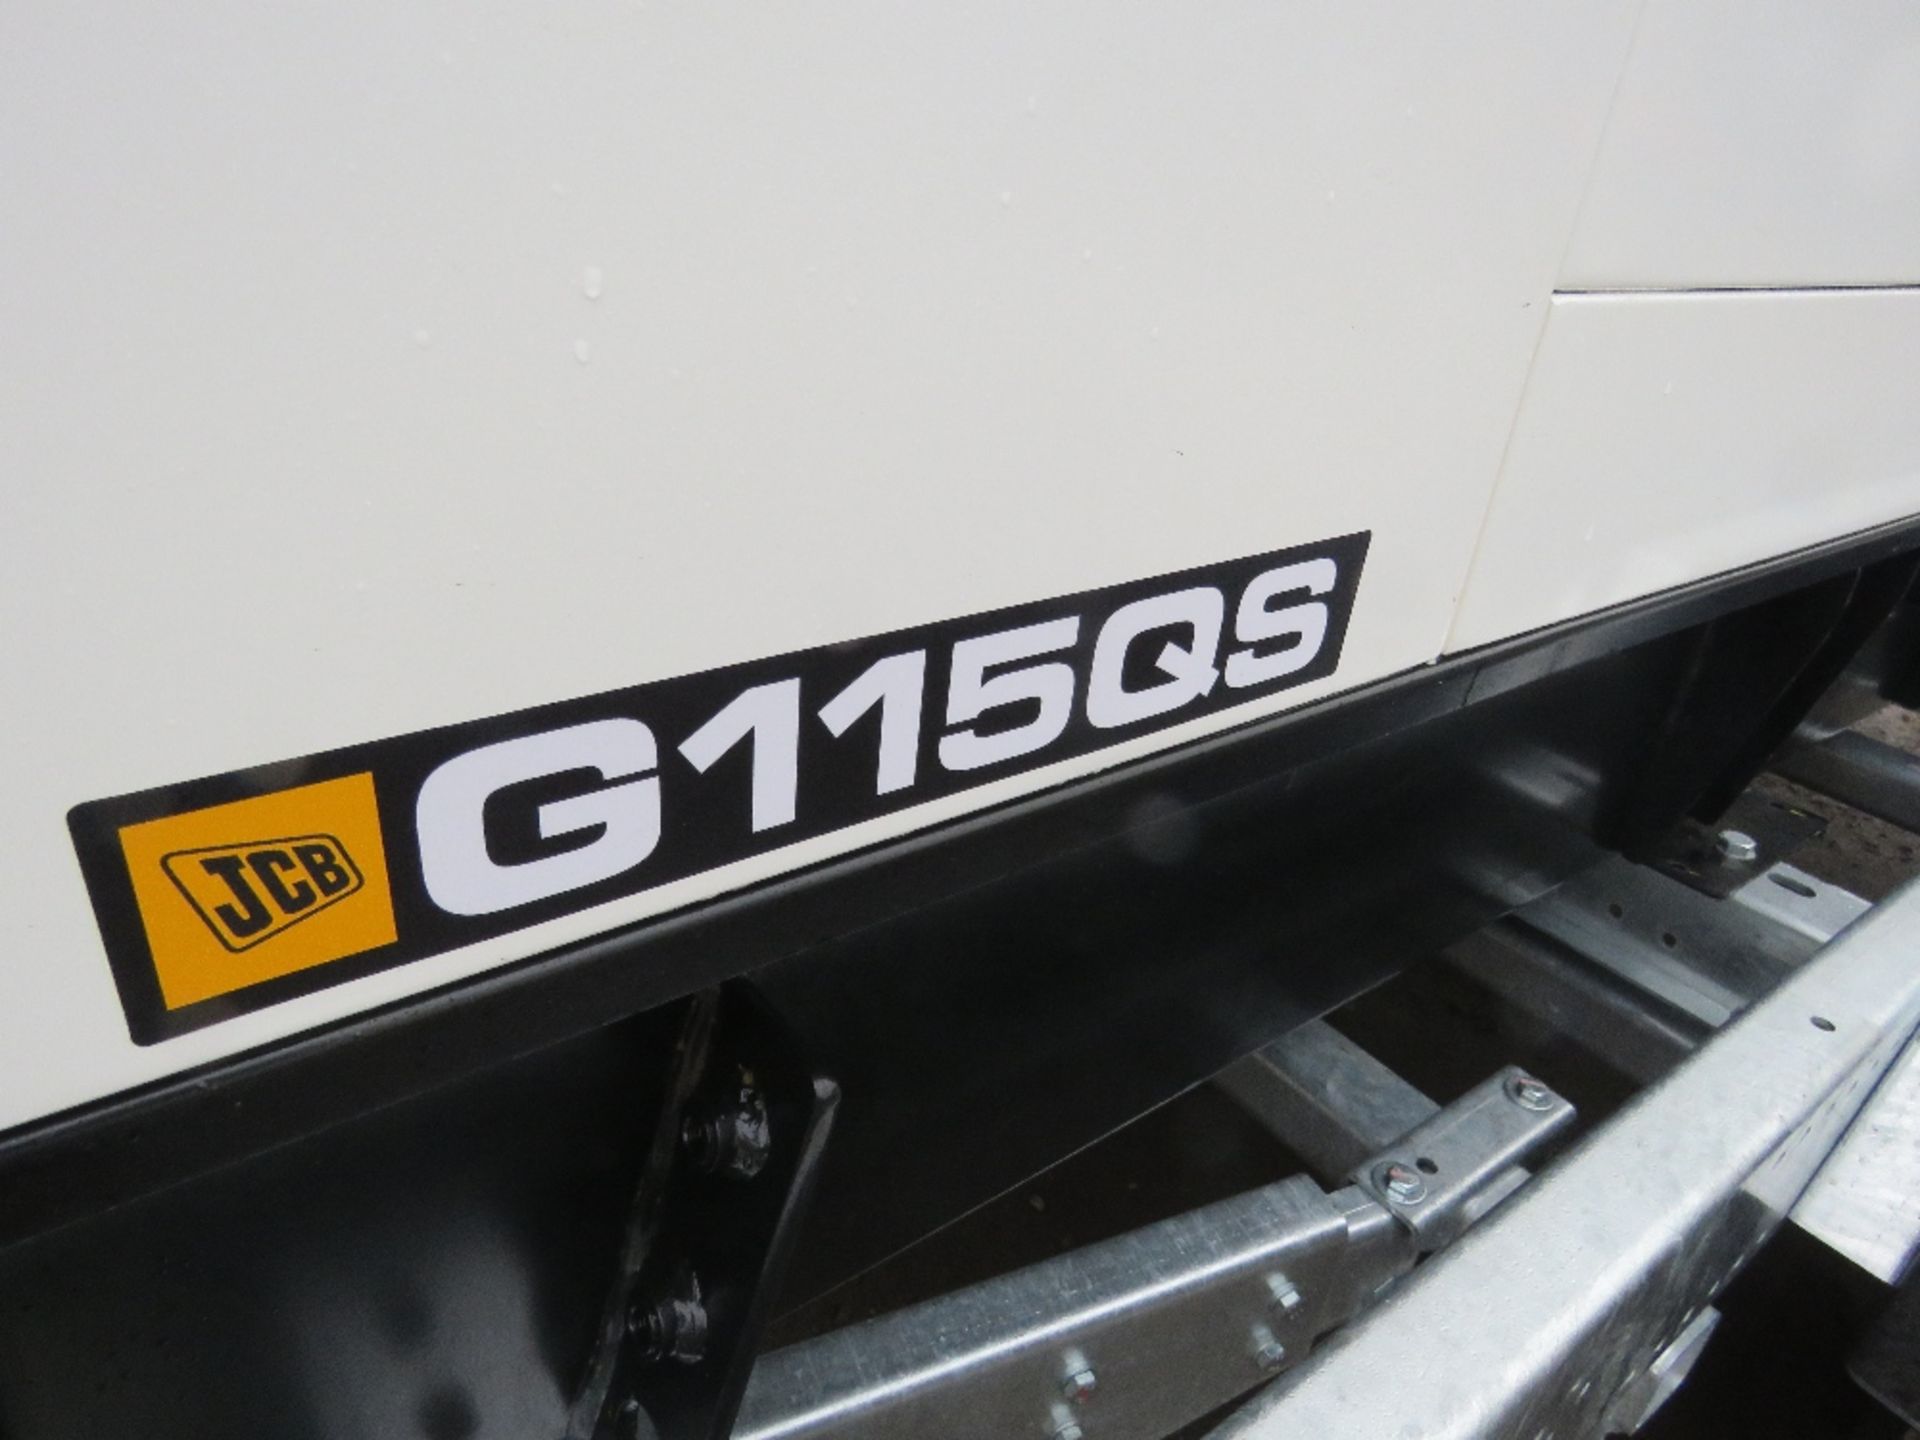 2023 JCB G115QS silenced diesel generator New & Unused, mounted on New & Unused Year 2023 KNOTT 1,80 - Image 14 of 18